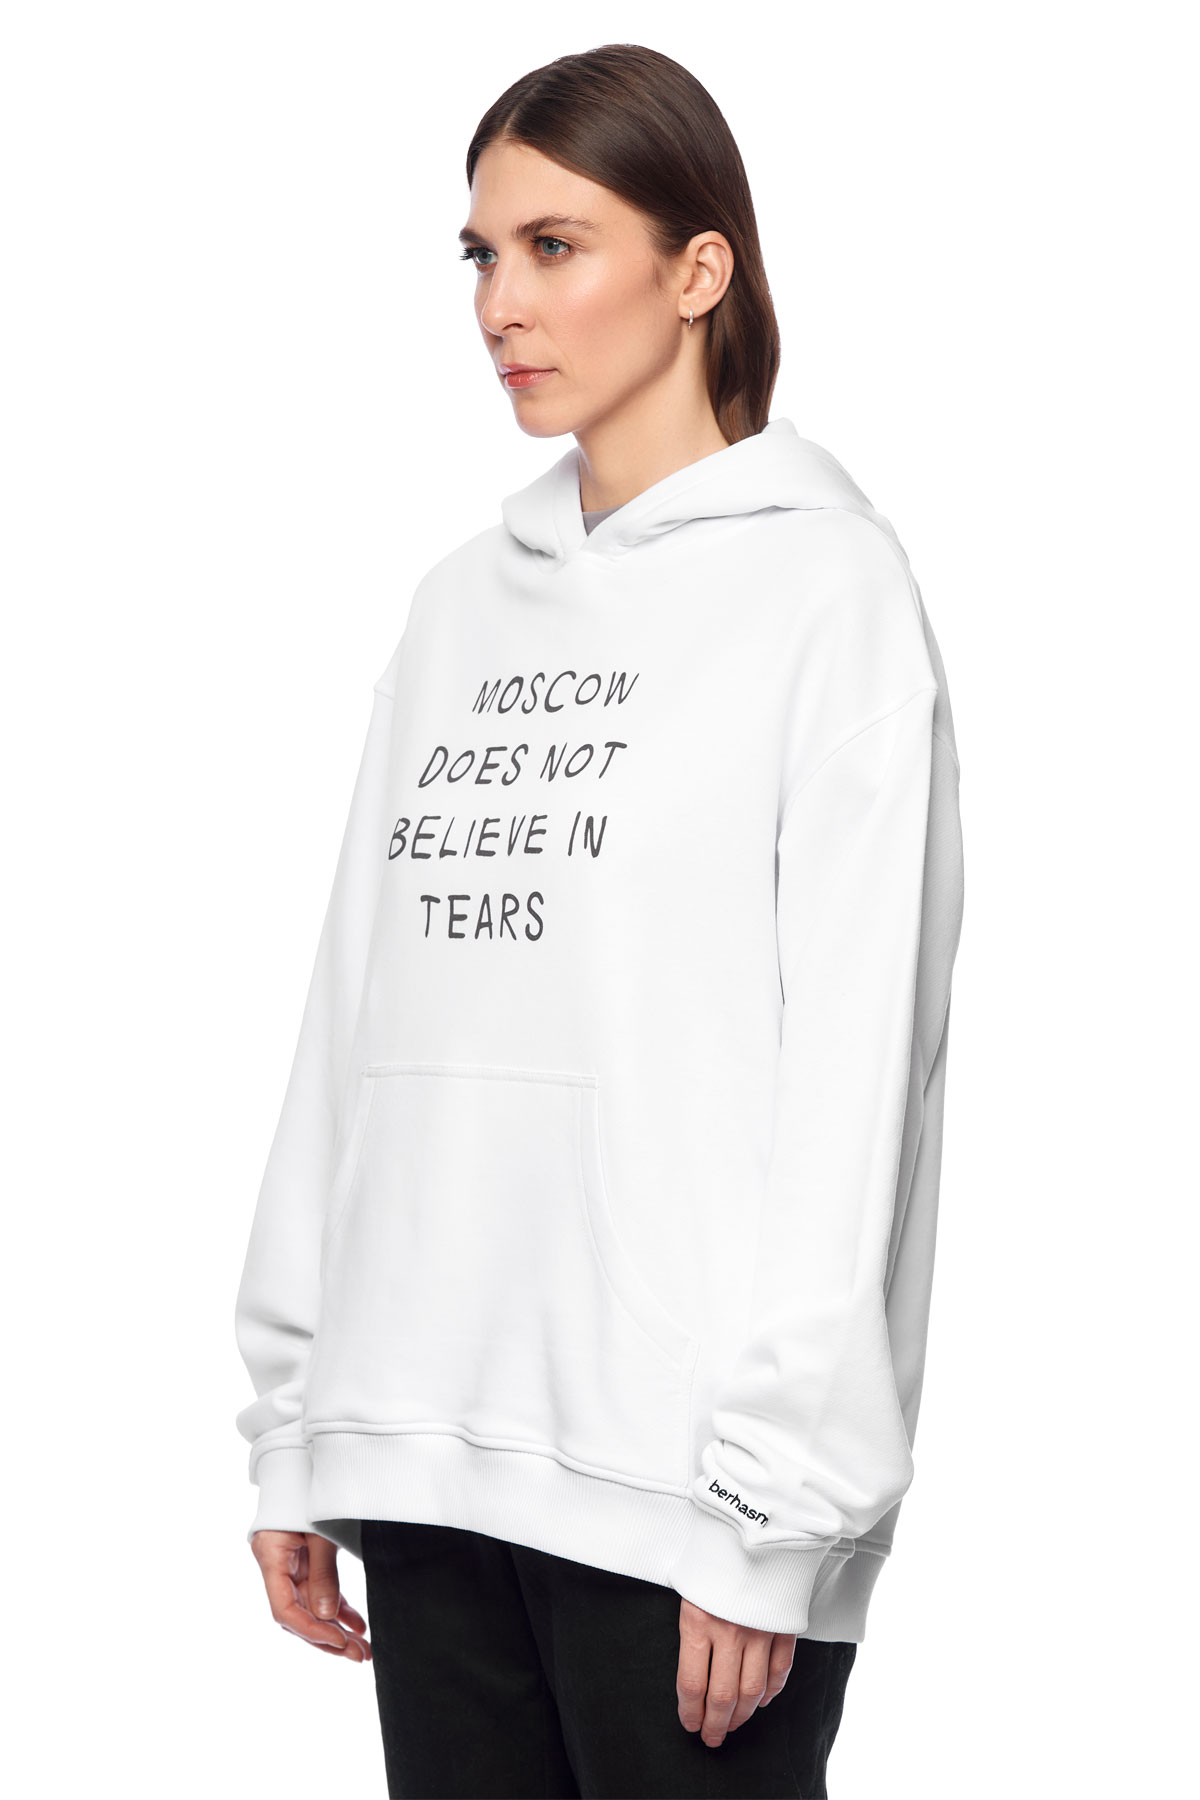 Moscow does not believe in tears print hoodie